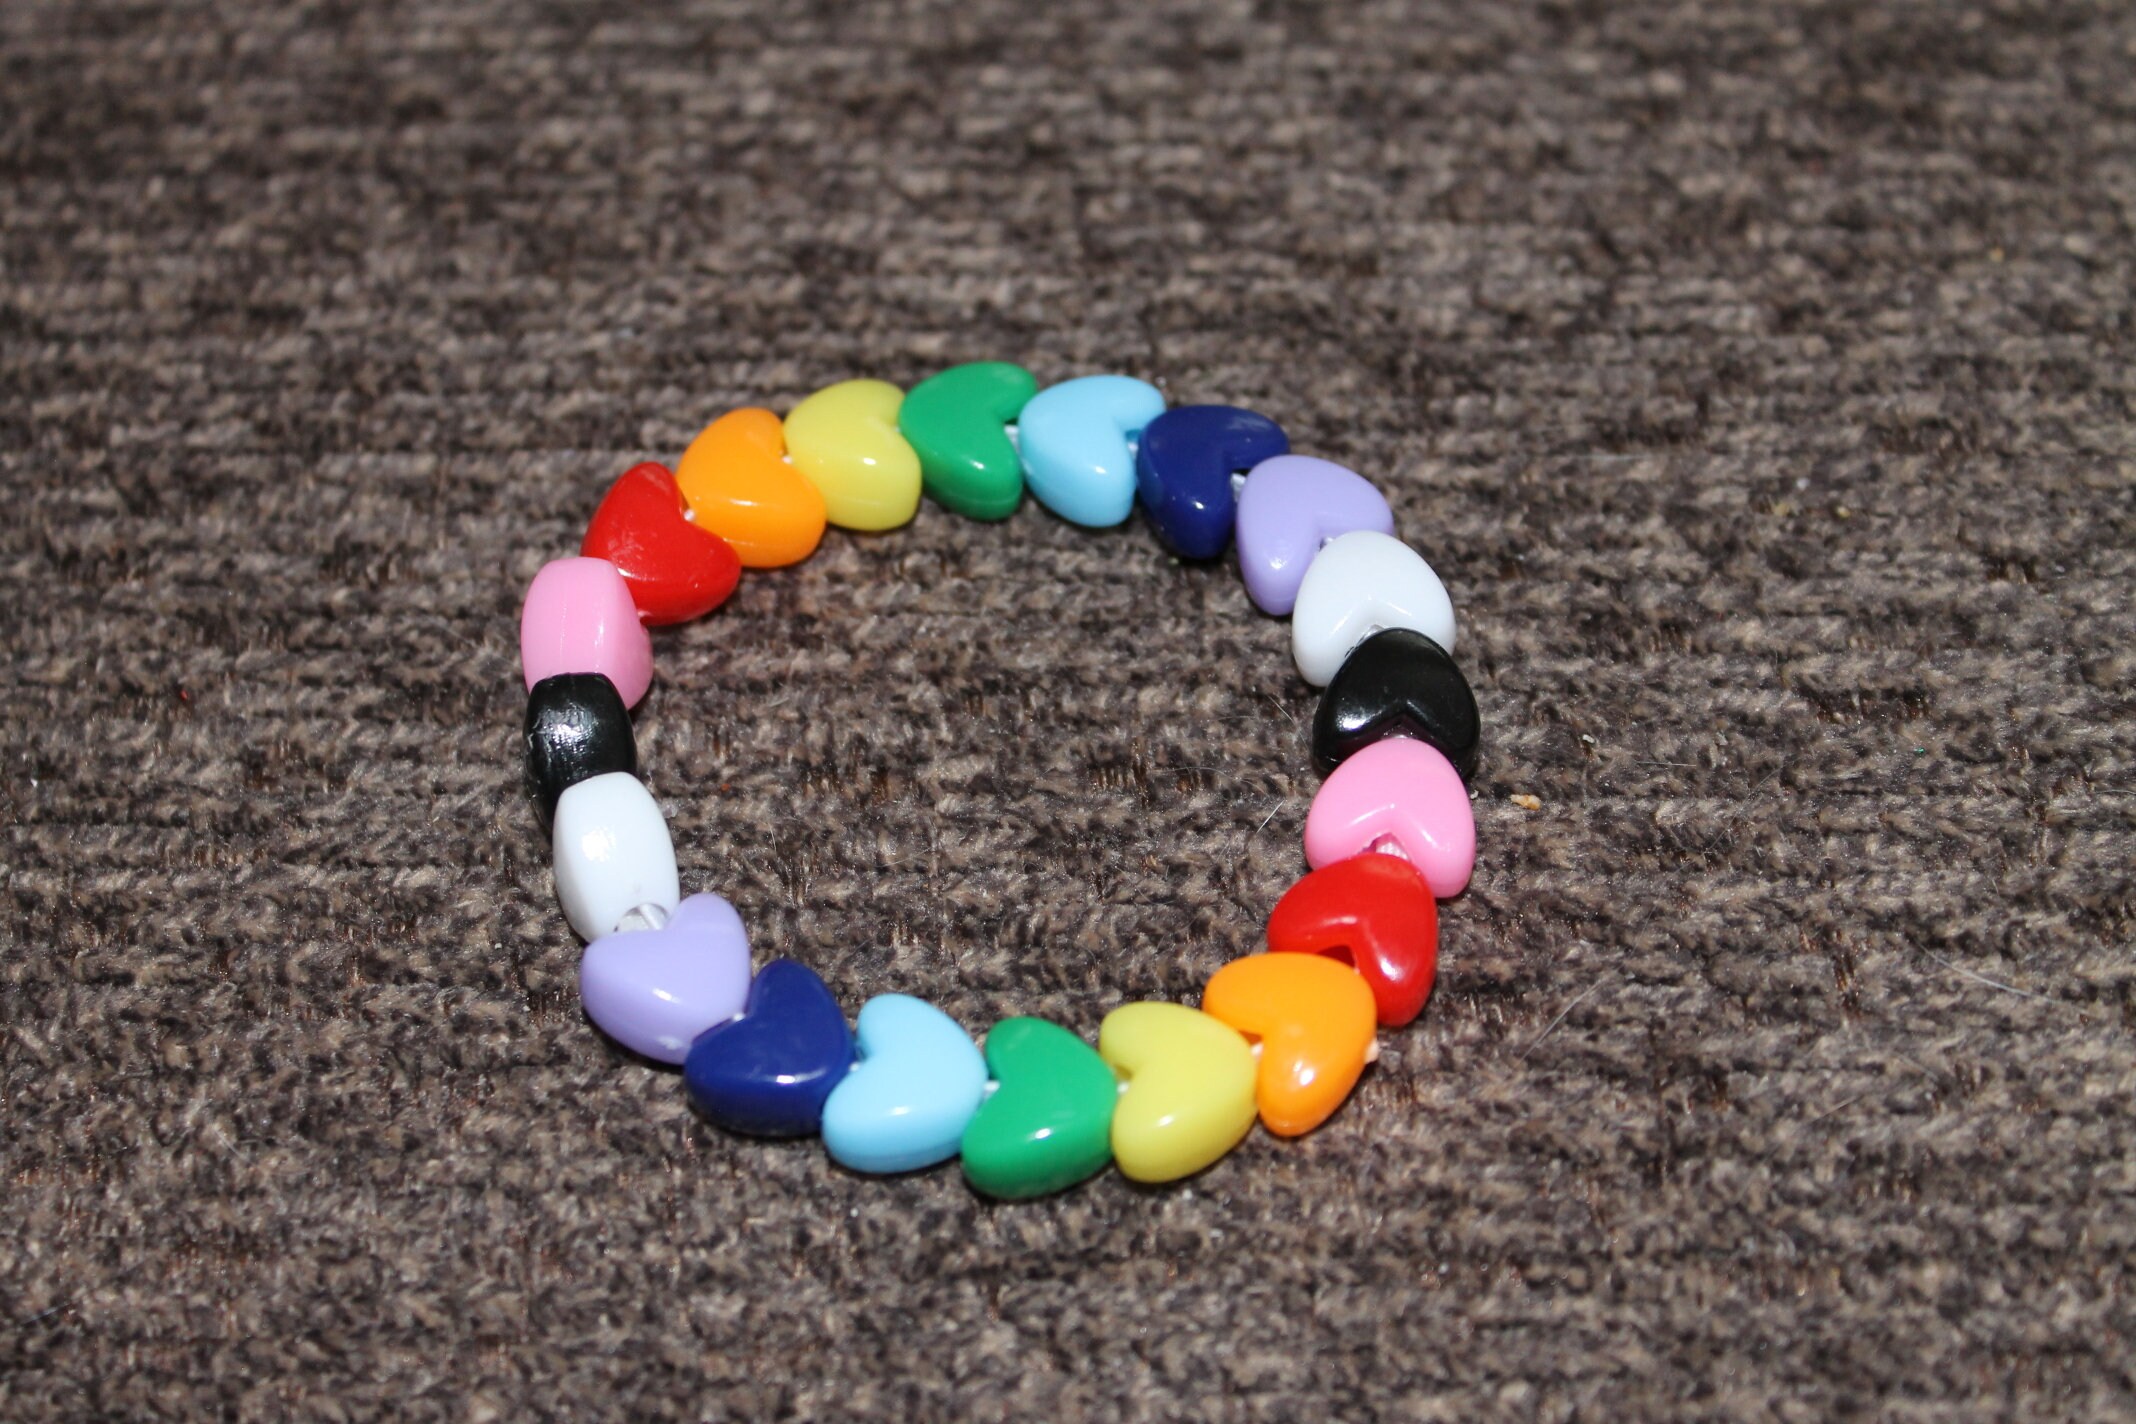 Fun Express Plastic Beaded Rainbow Heart Bracelets - Easter & Novelty  Jewelry Set (1 Dozen)